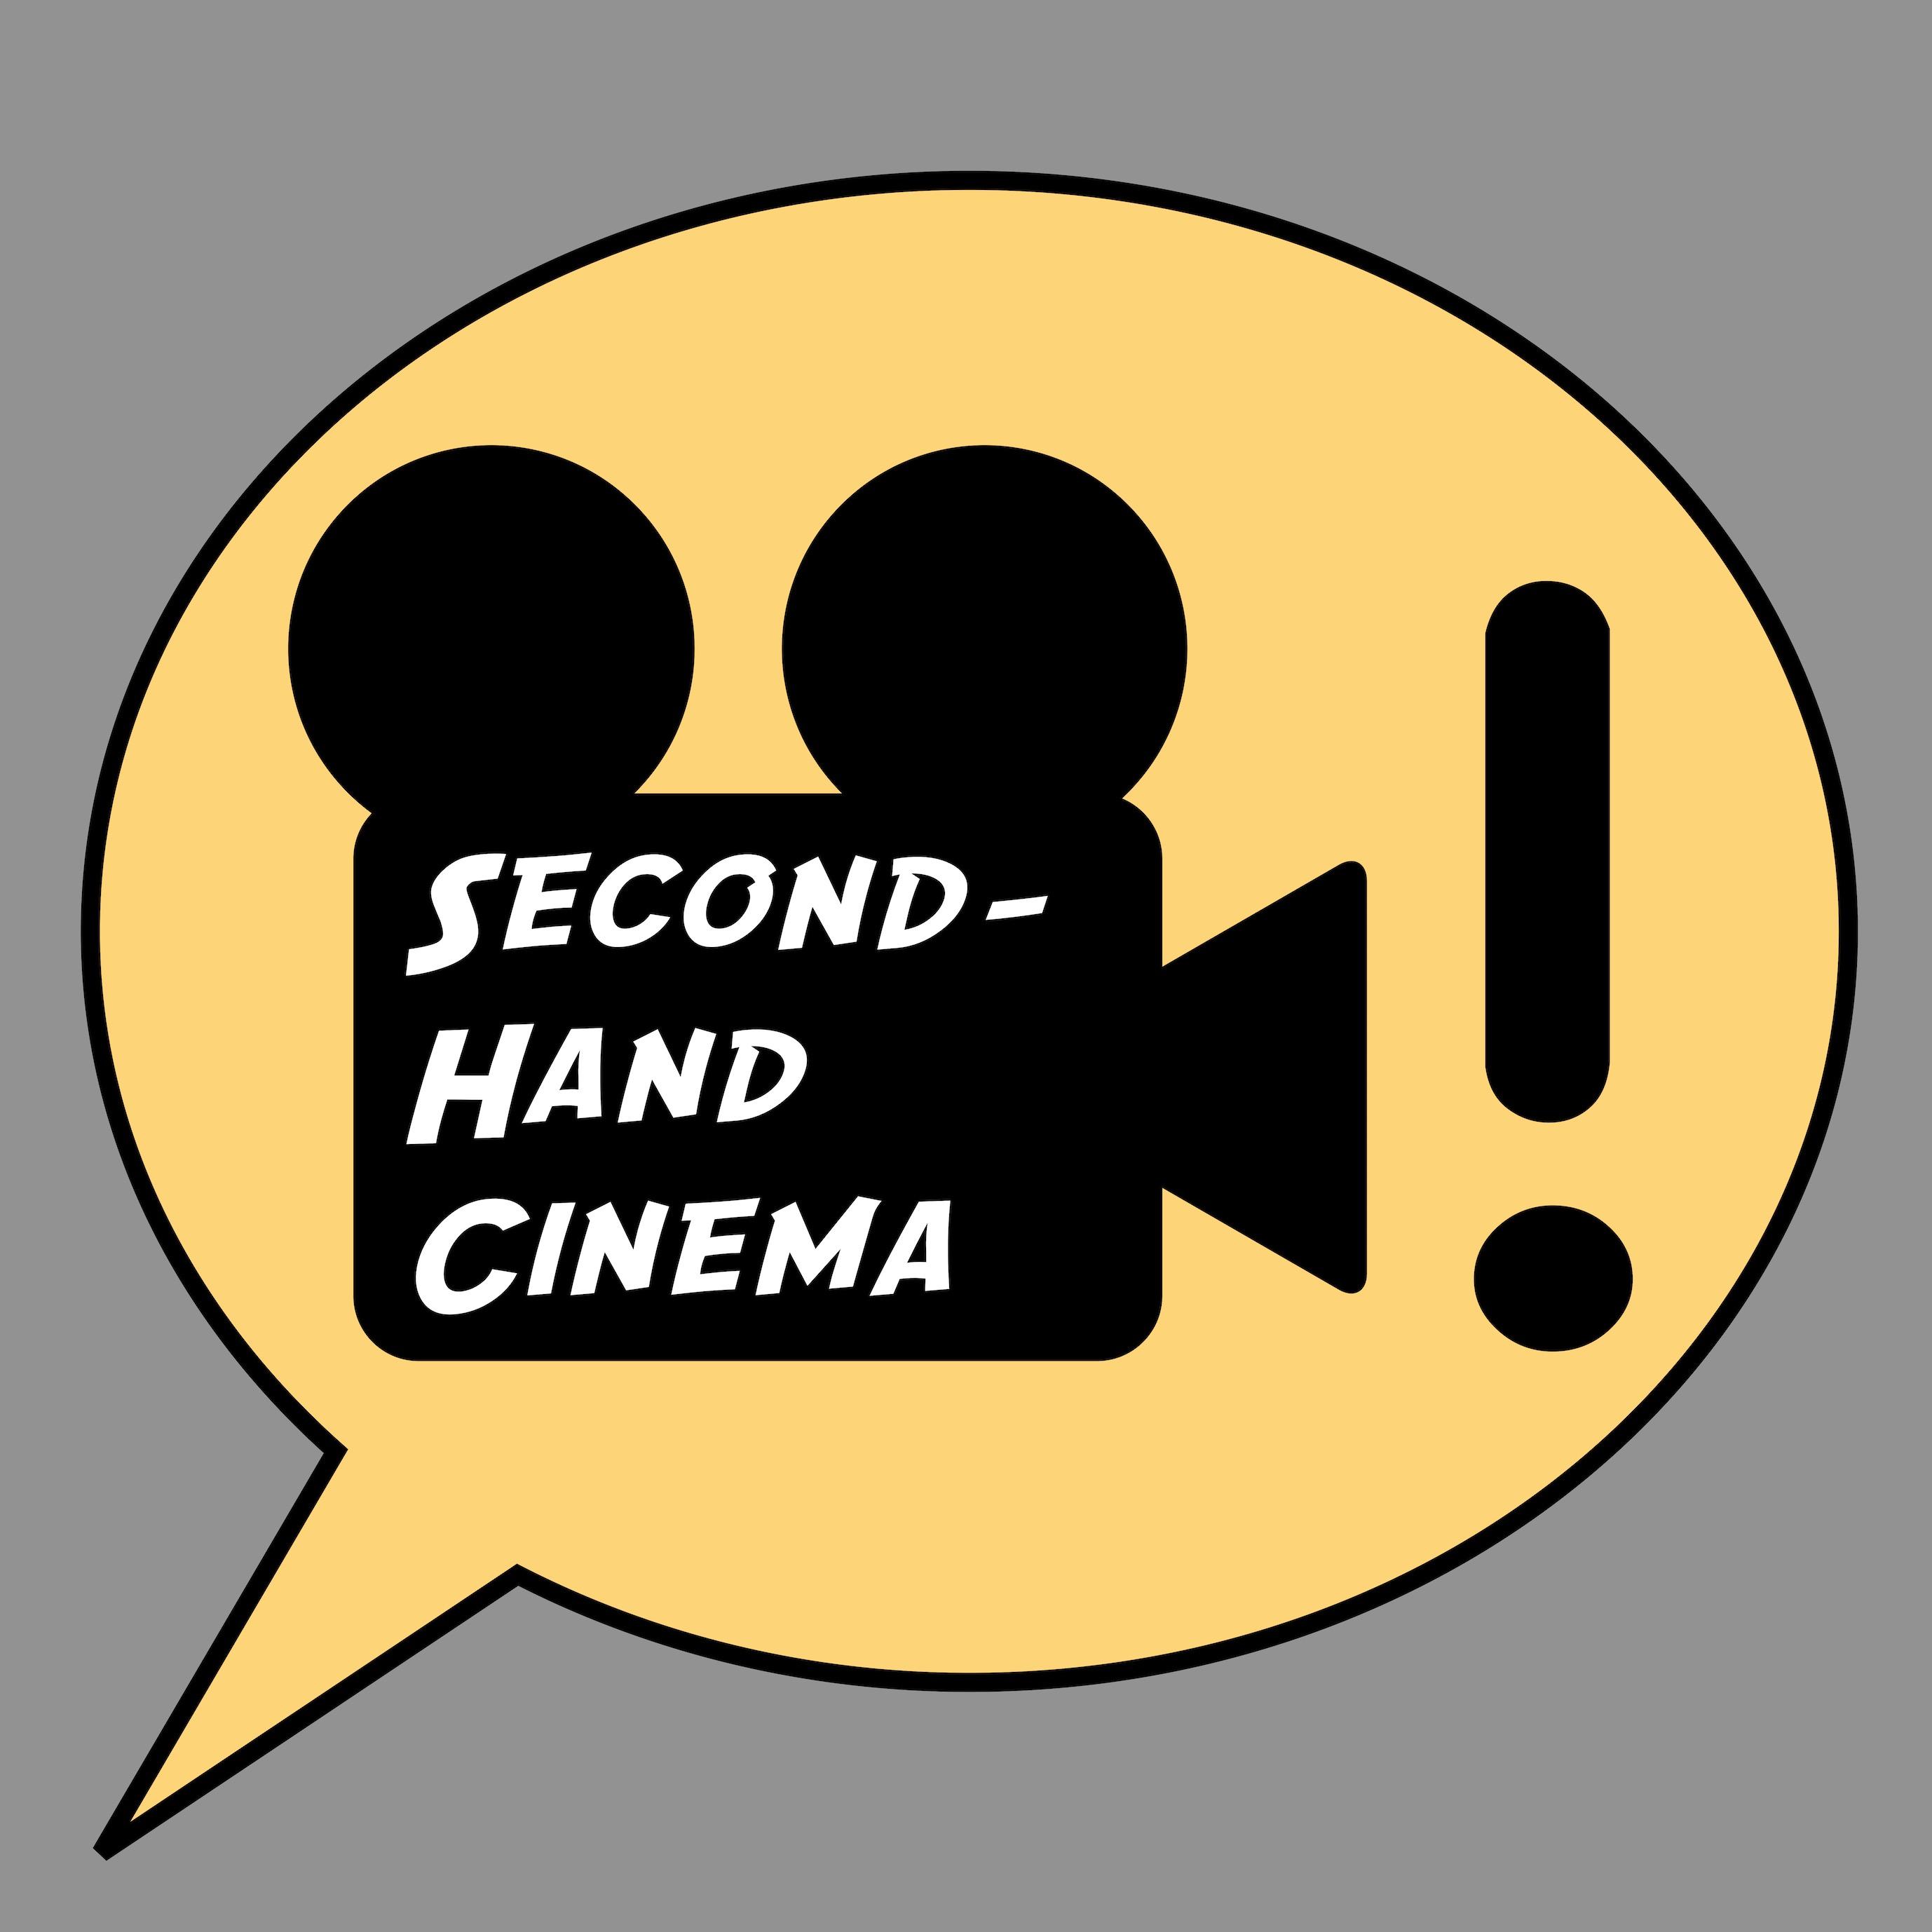 Second-Hand Cinema